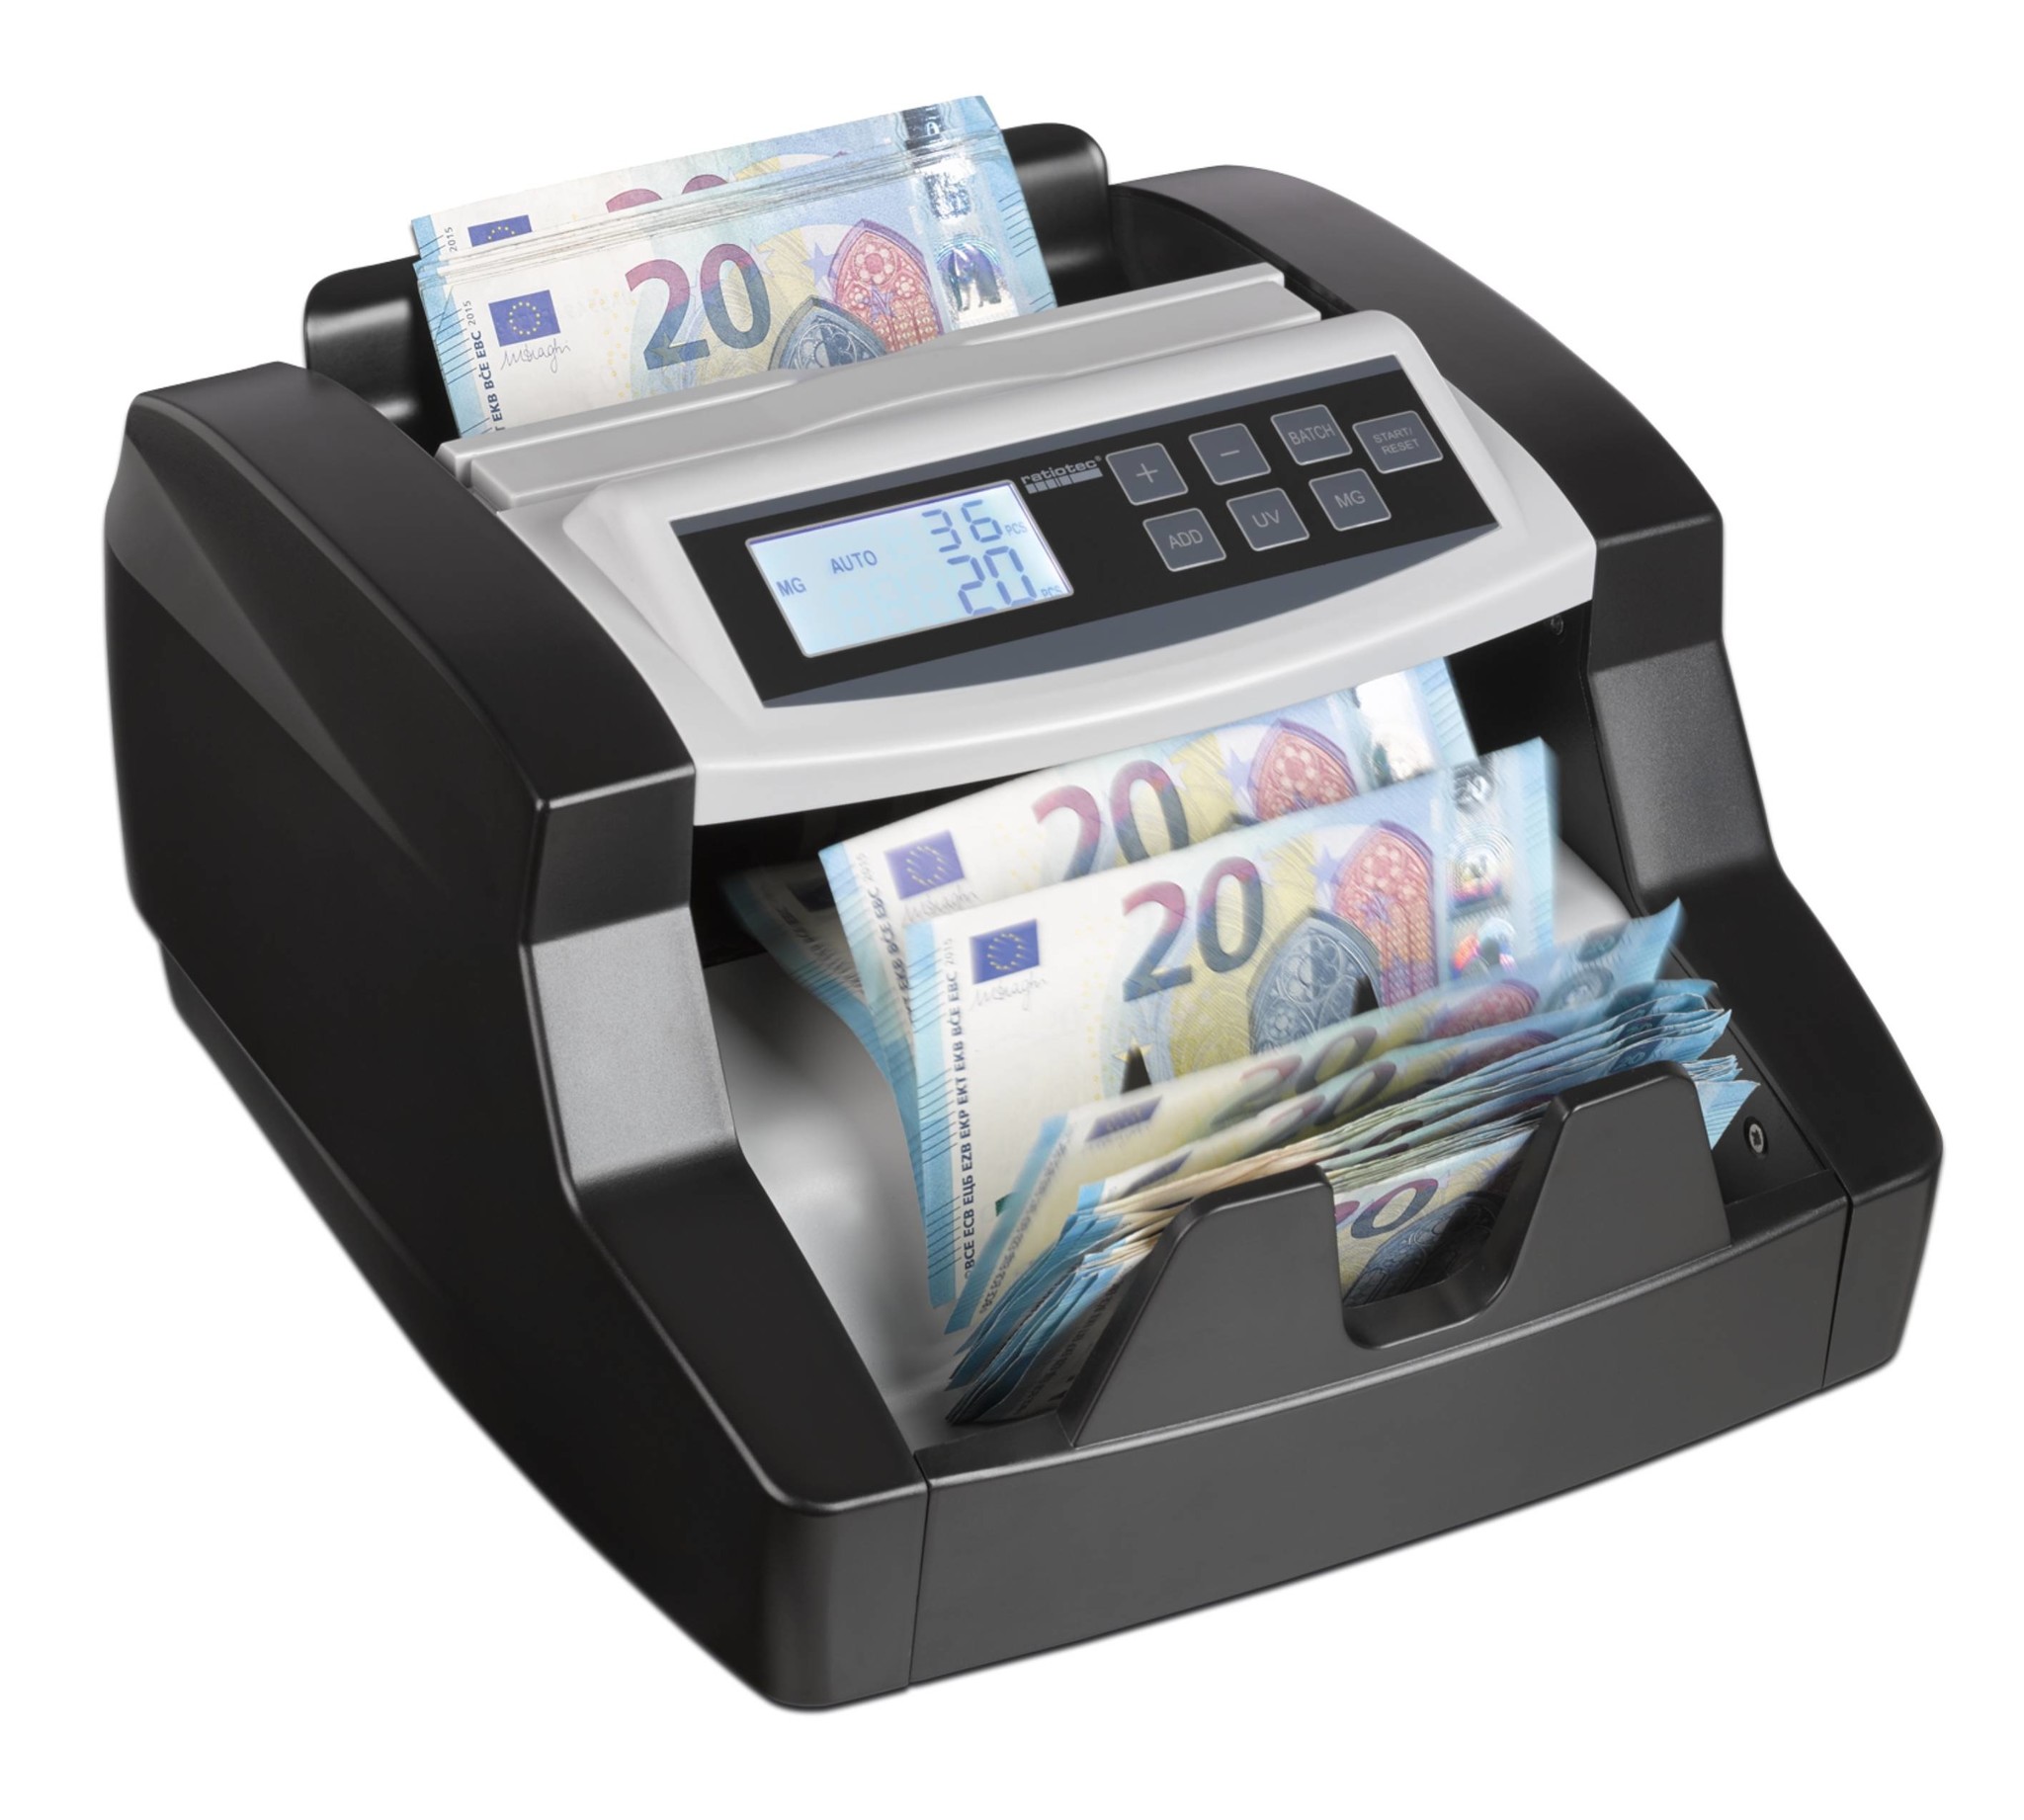 ratiotec Banknotenzählmaschine rapidcount B40 von ratiotec